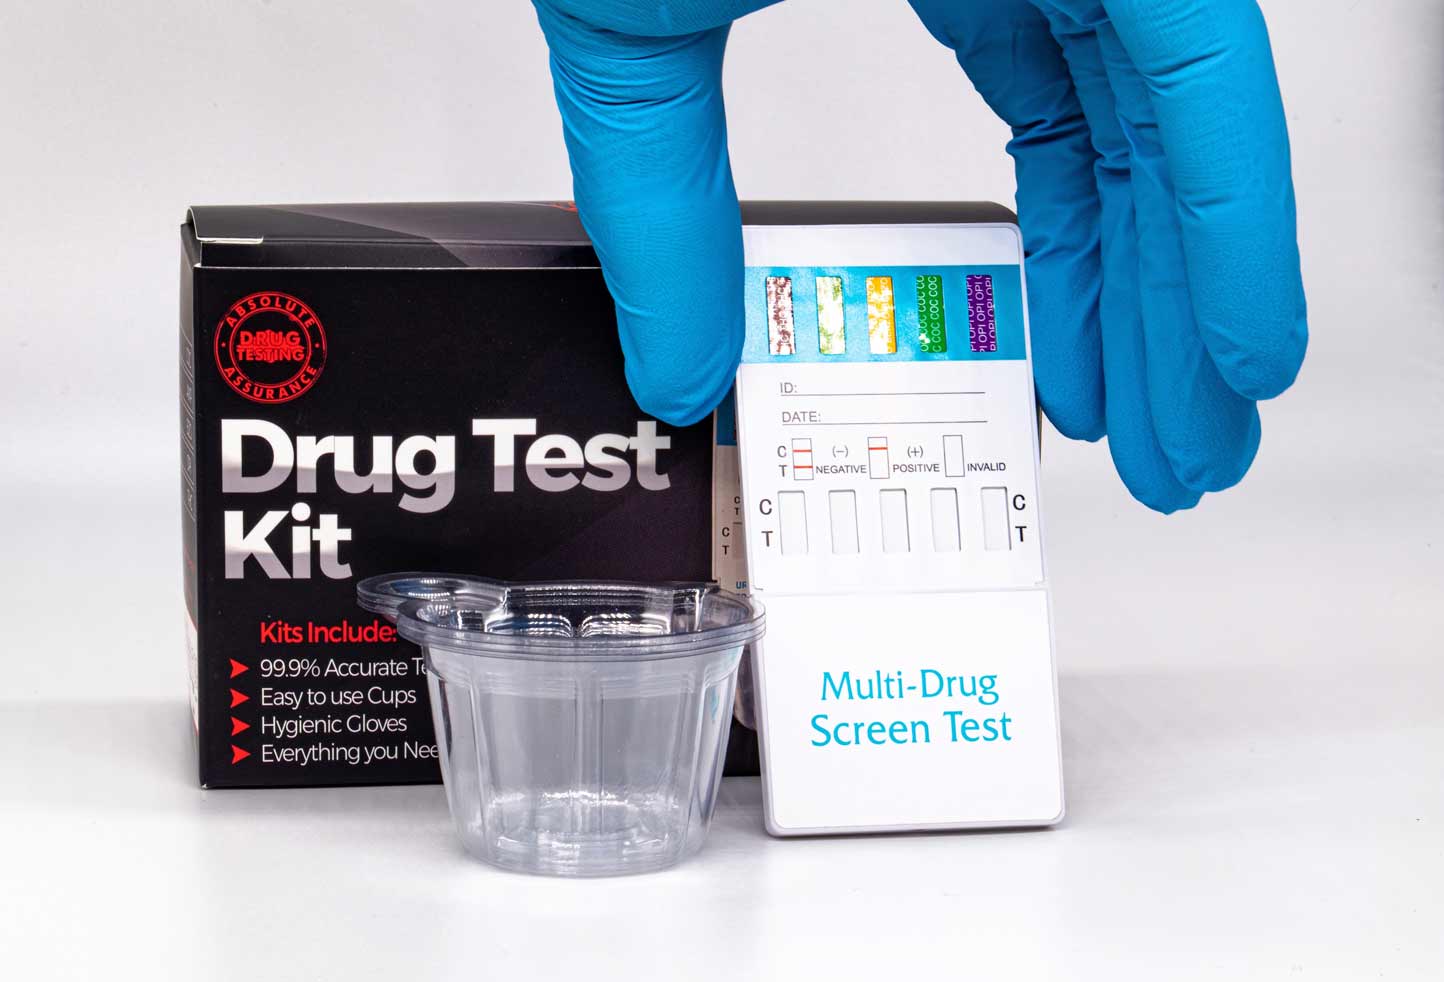 Drug Testing Your Teen